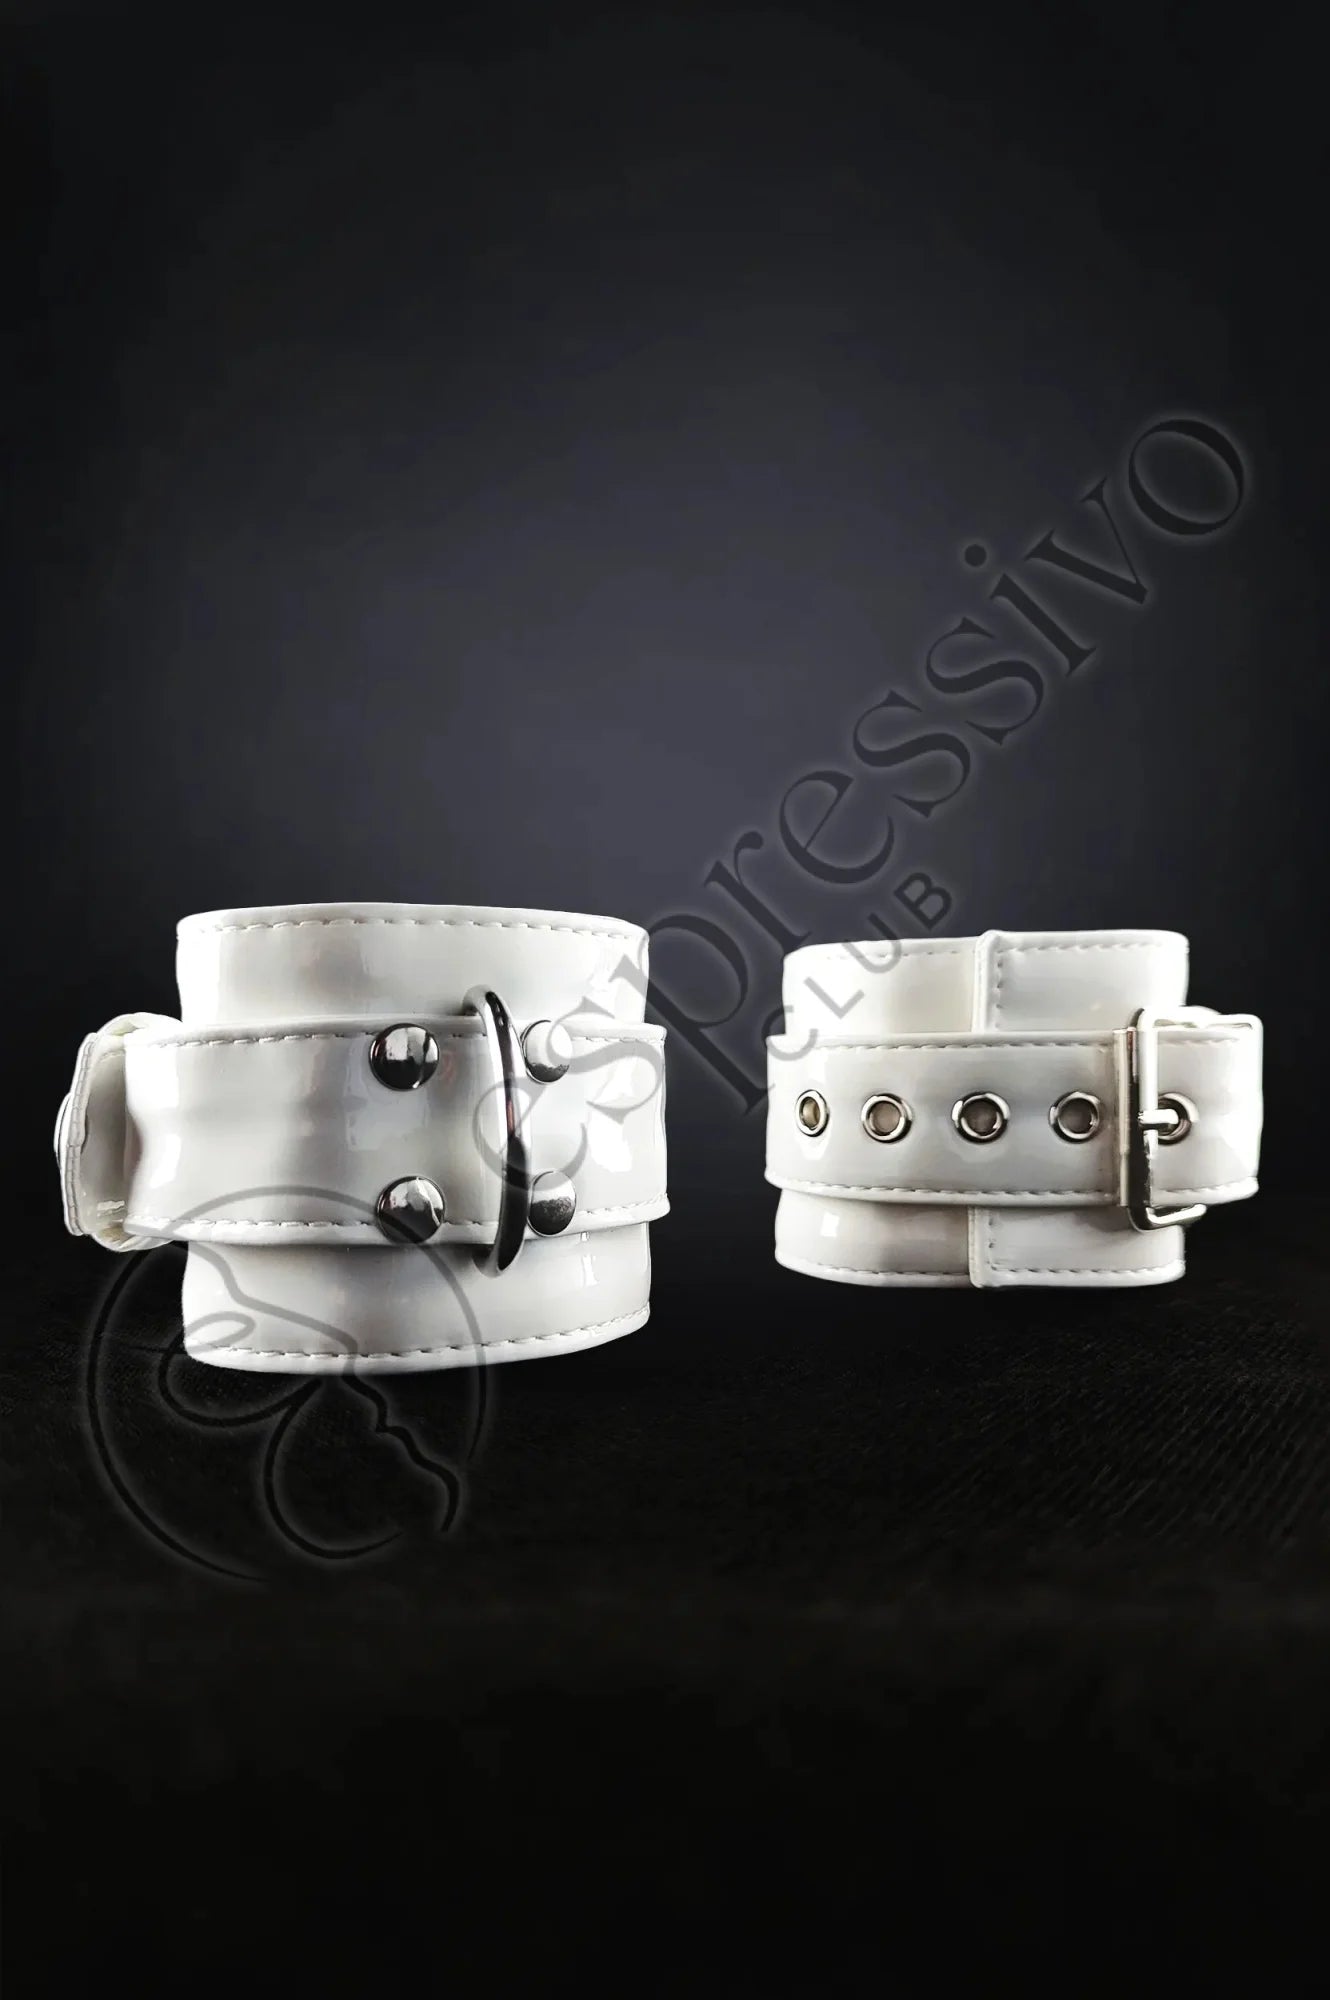 Bondage Cuffs In White Pvc - Wrist & Ankle Bdsm Restraints Jewelry